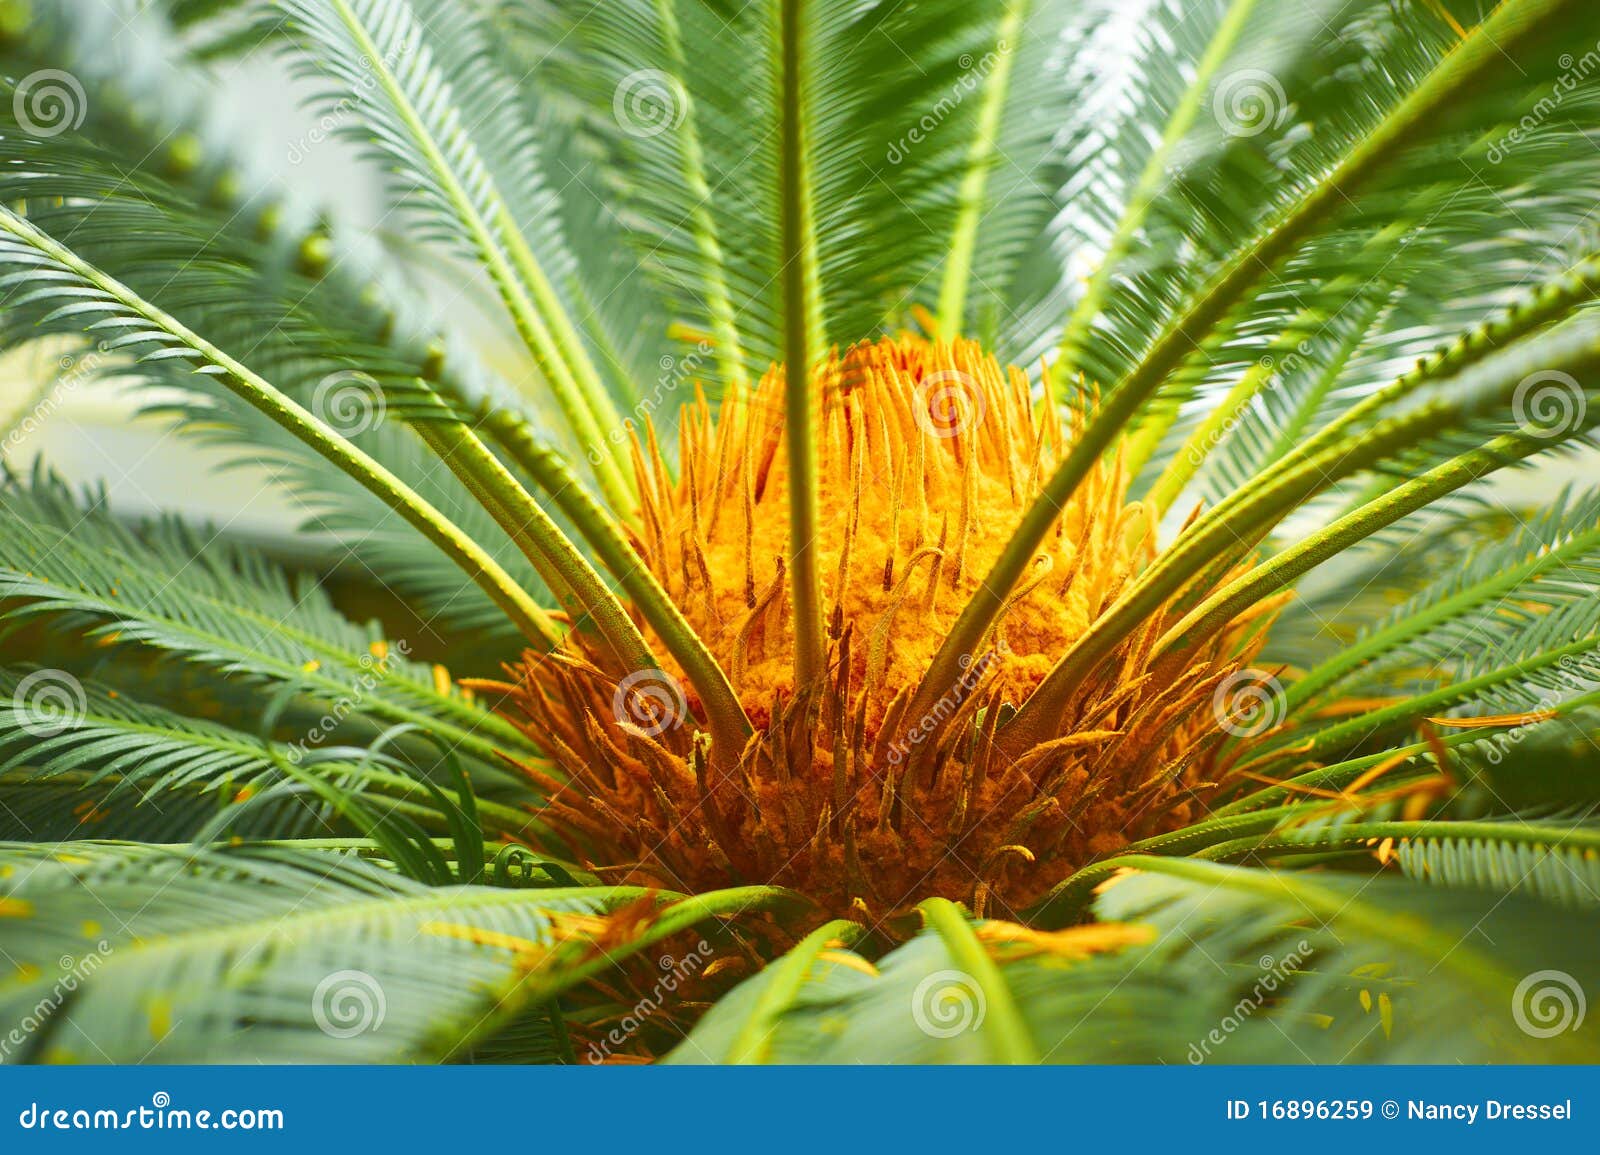 closeup of palmtree